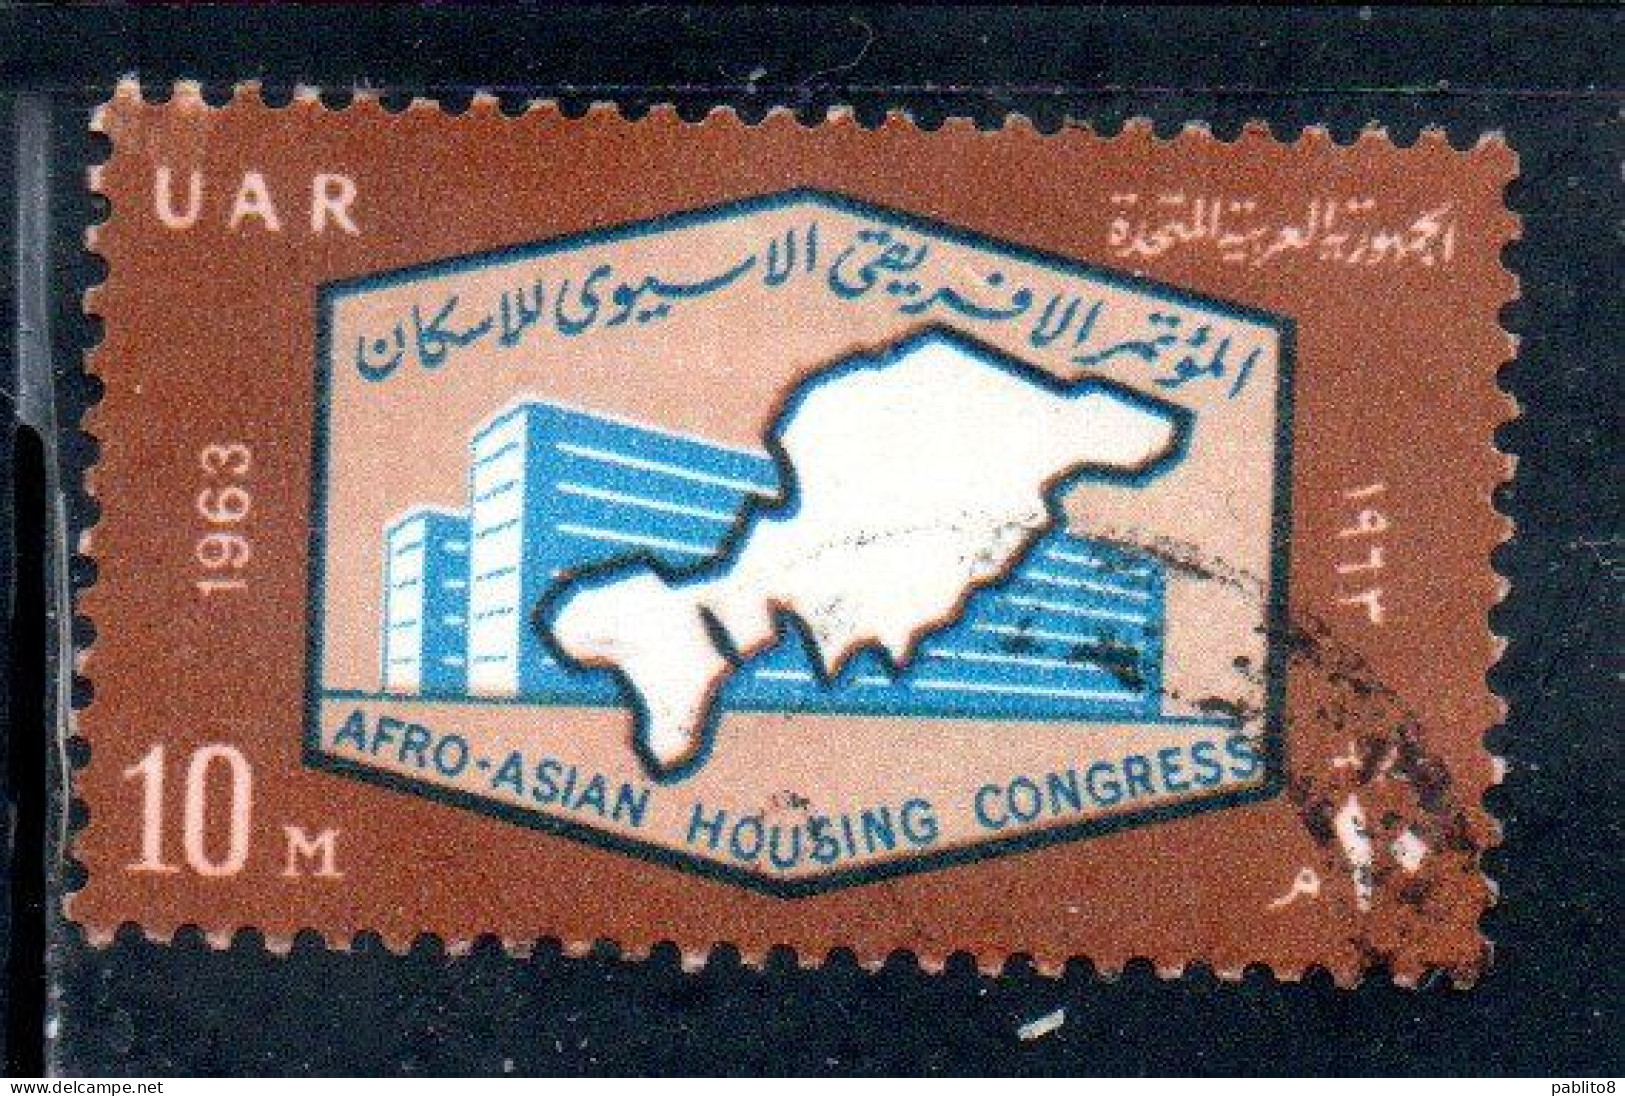 UAR EGYPT EGITTO 1963 AFRO-ASIAN HOUSING CONGRESS MODERN BUILDING AND MAP 10m  USED USATO OBLITERE' - Oblitérés